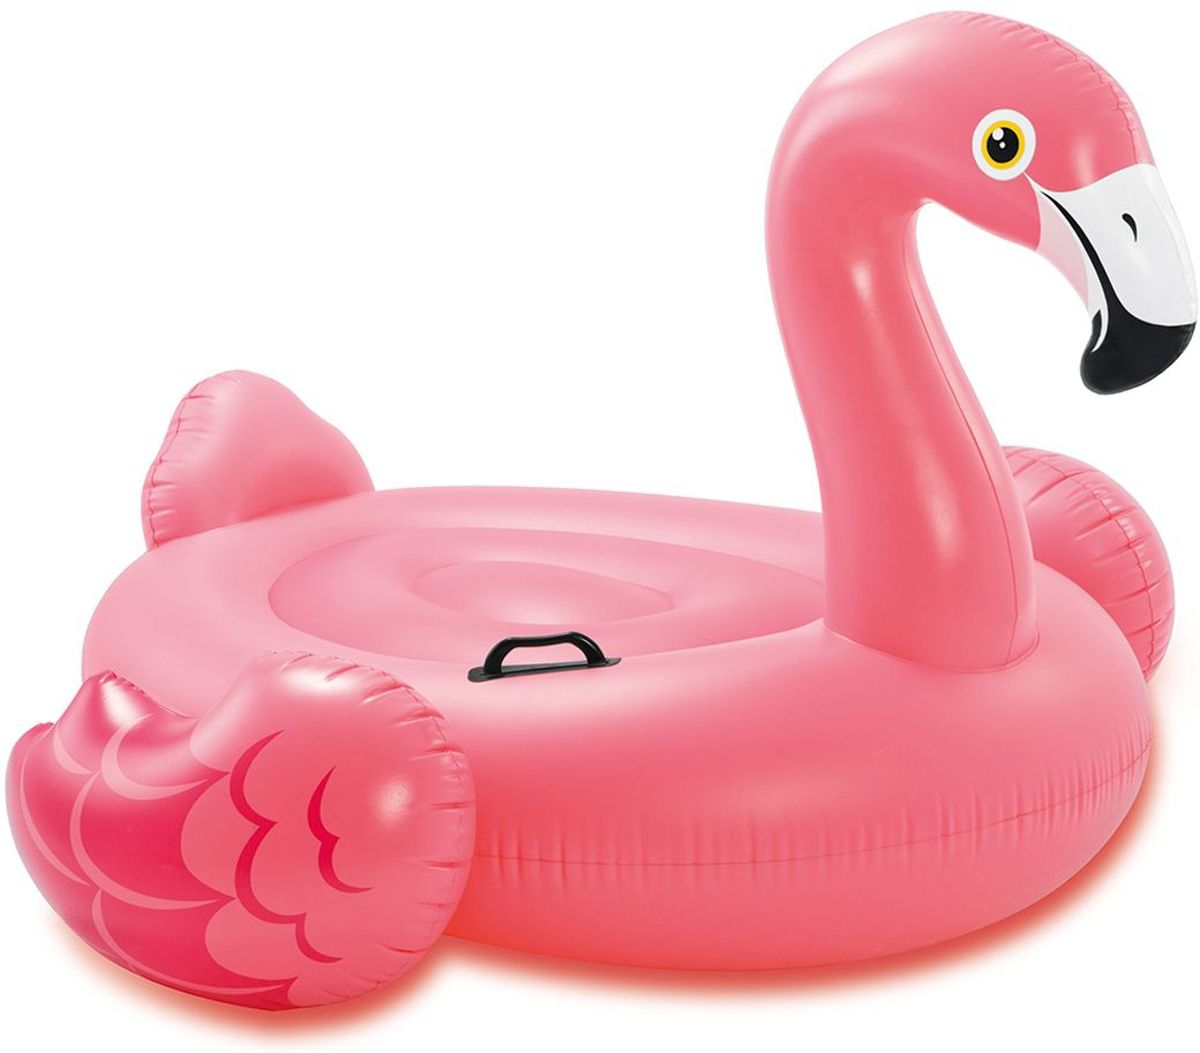   Flamingo Ride-on - Opblaasbare Flamingo